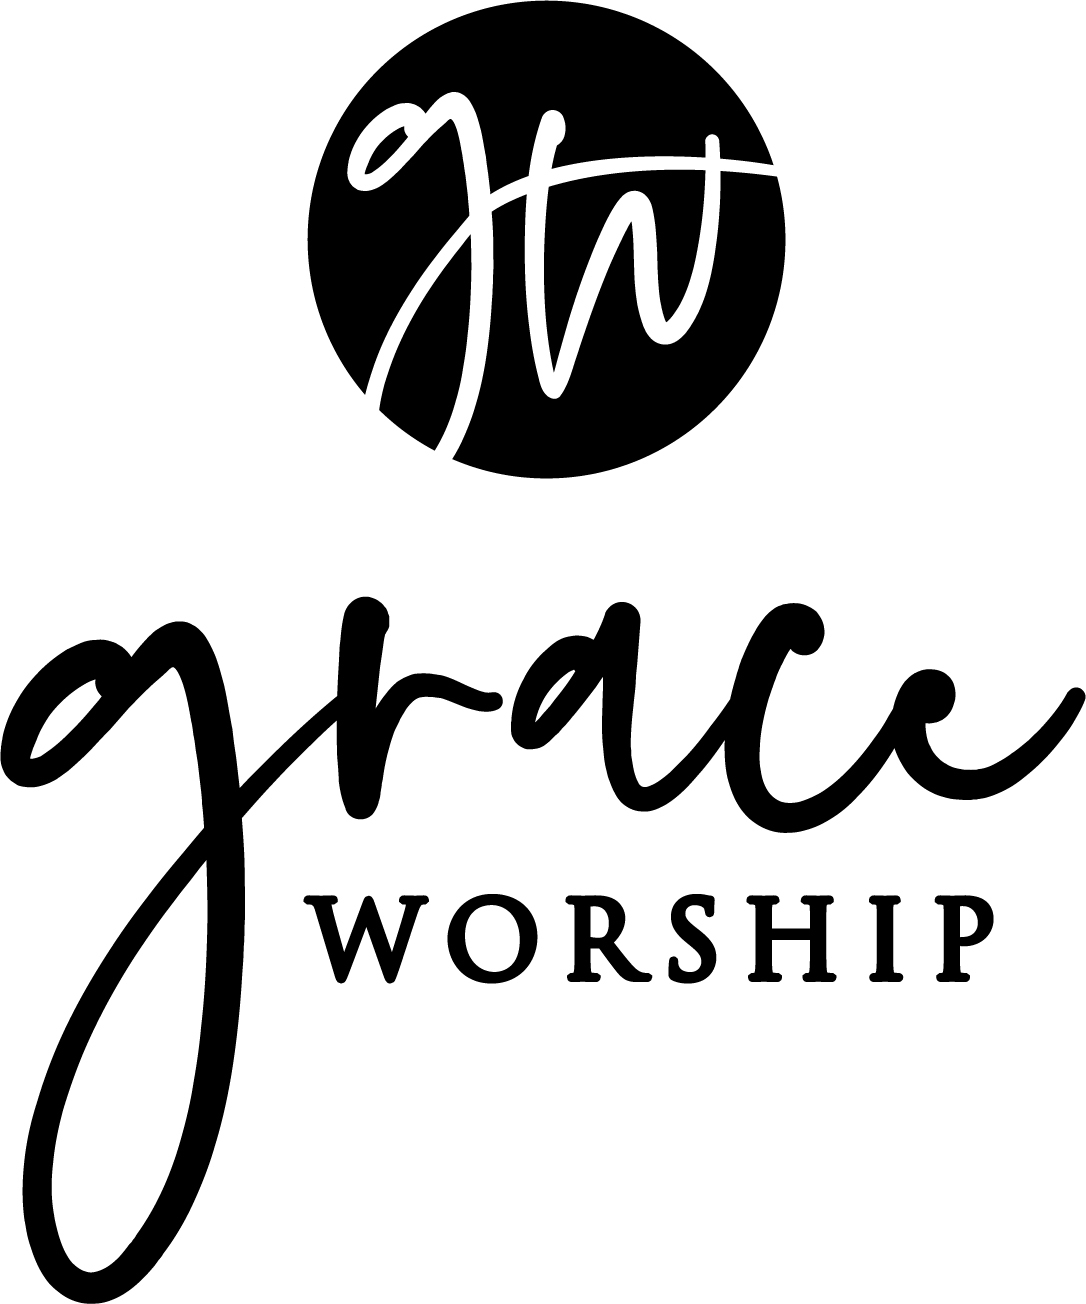 Grace_worship_logo_BW_.jpg